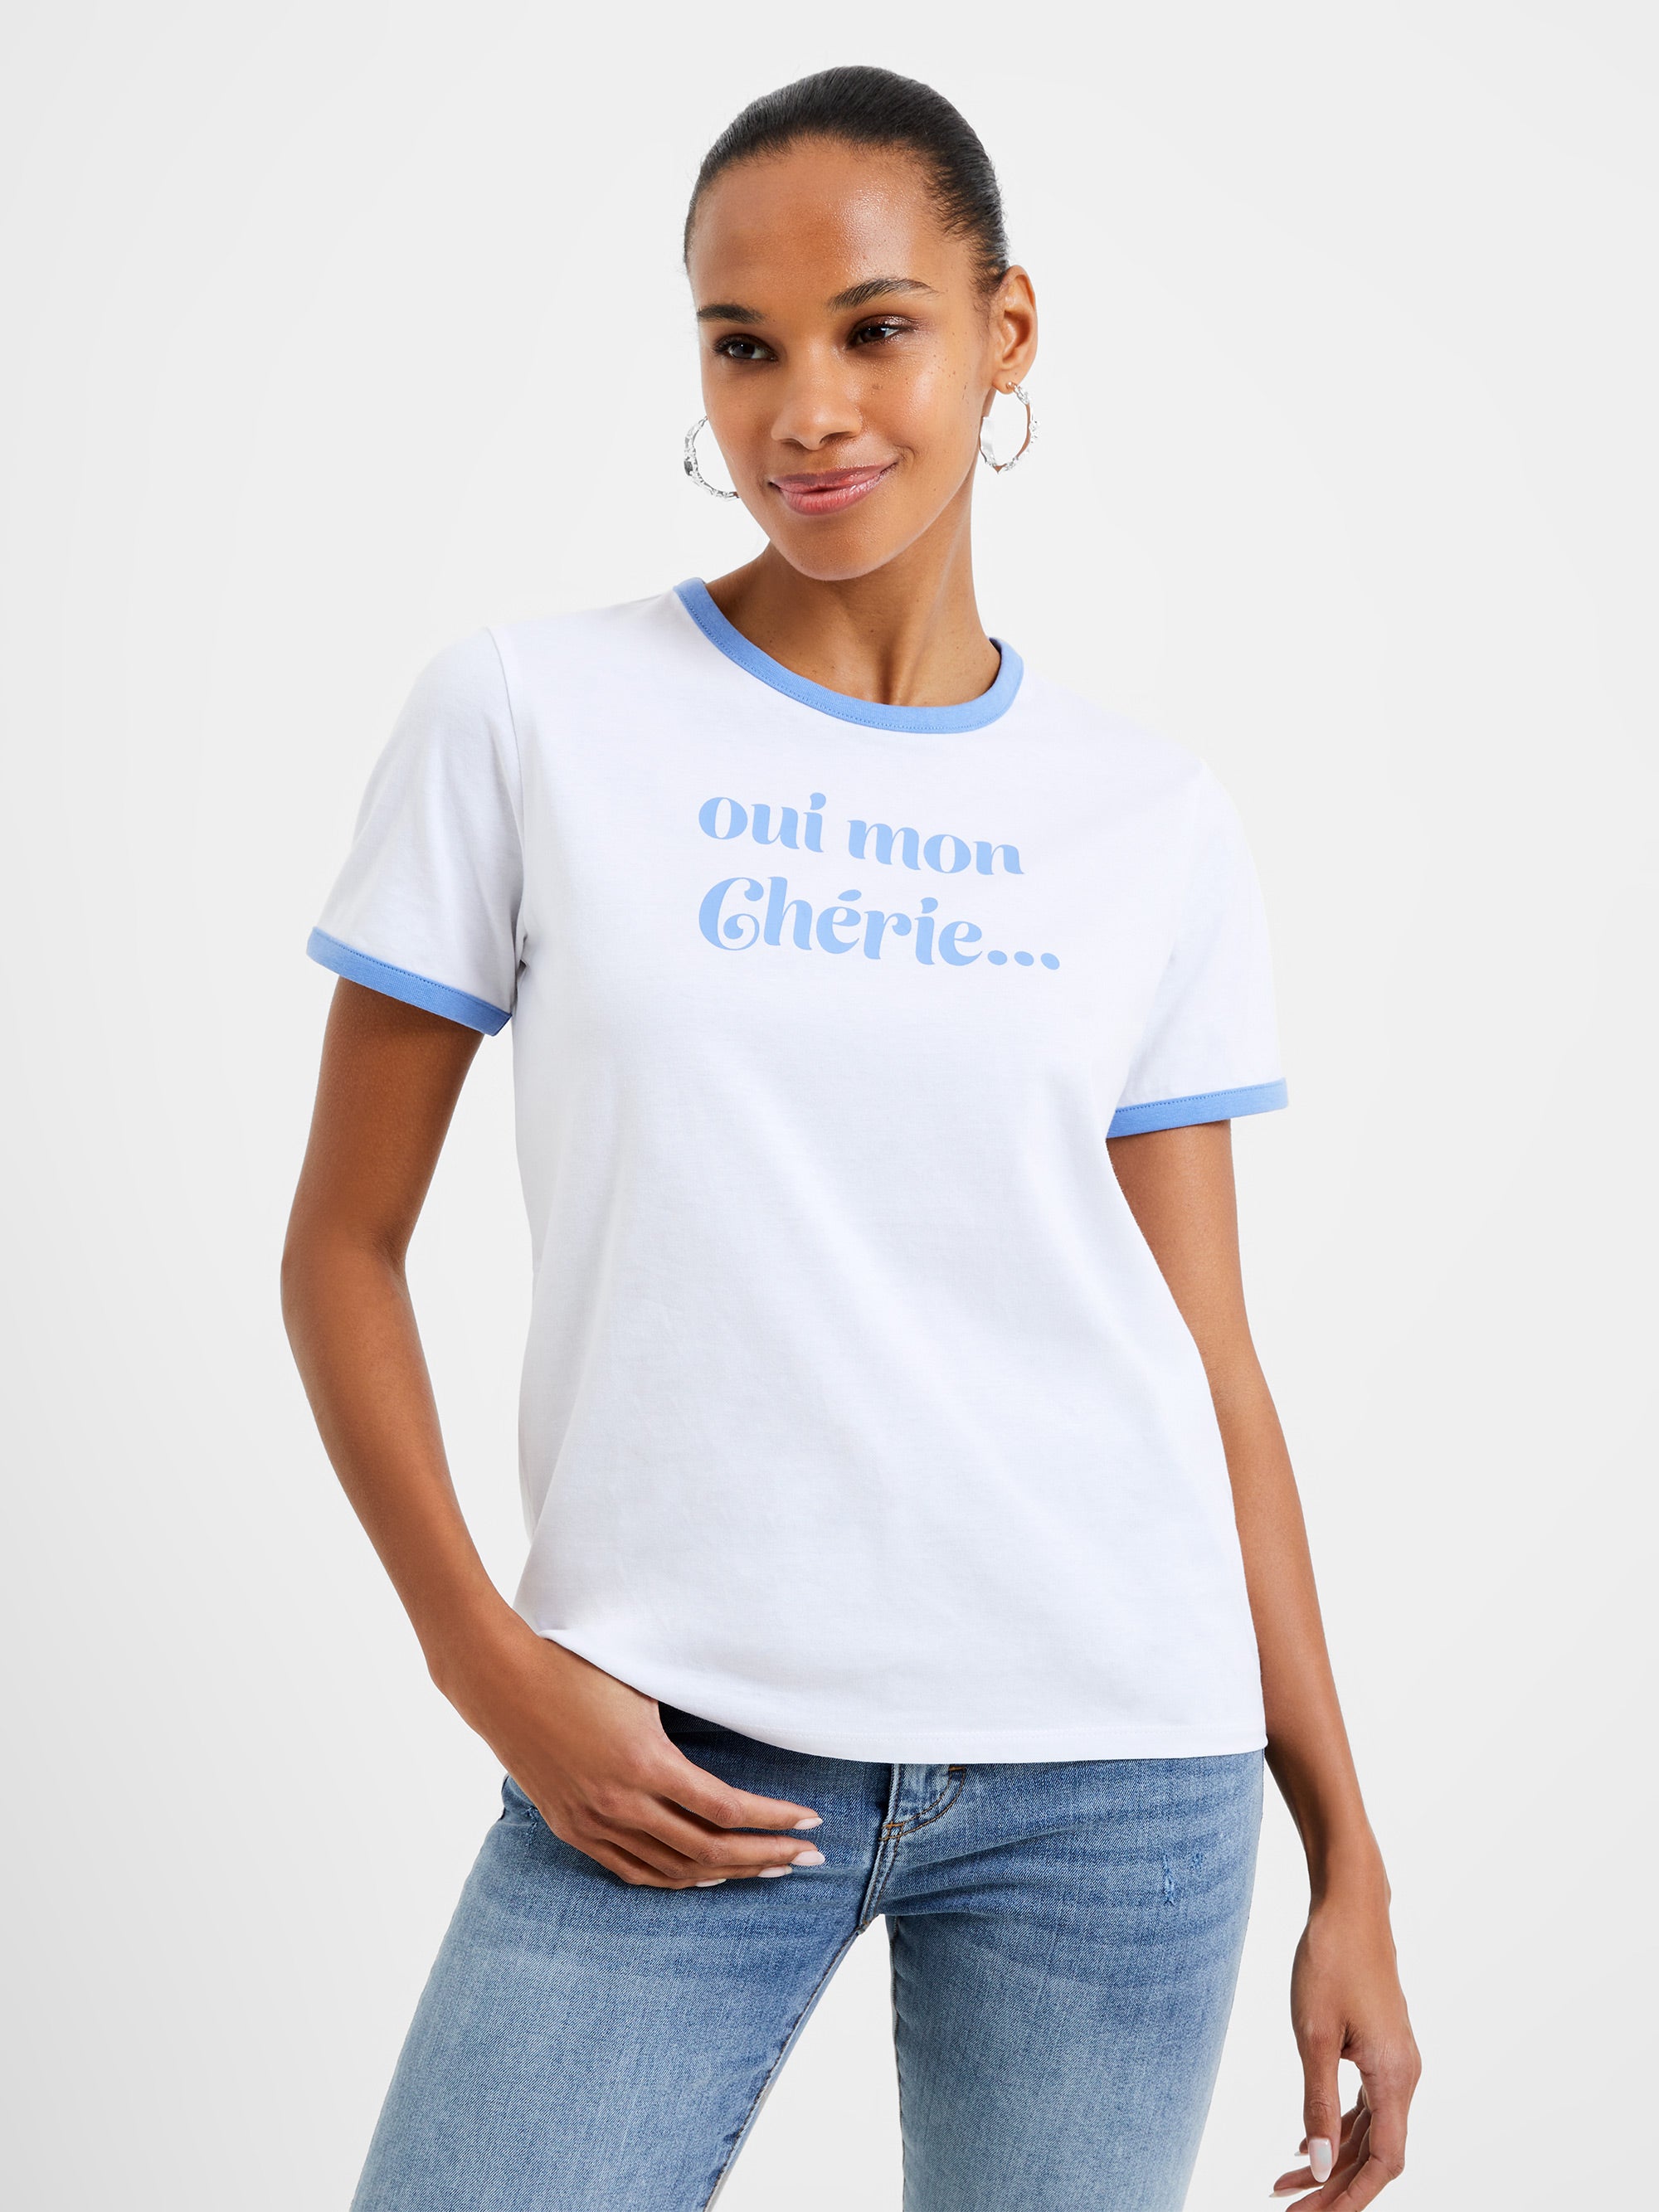 Oui Mon Cherie Ringer T-Shirt White/Tranquil Blue | French Connection UK